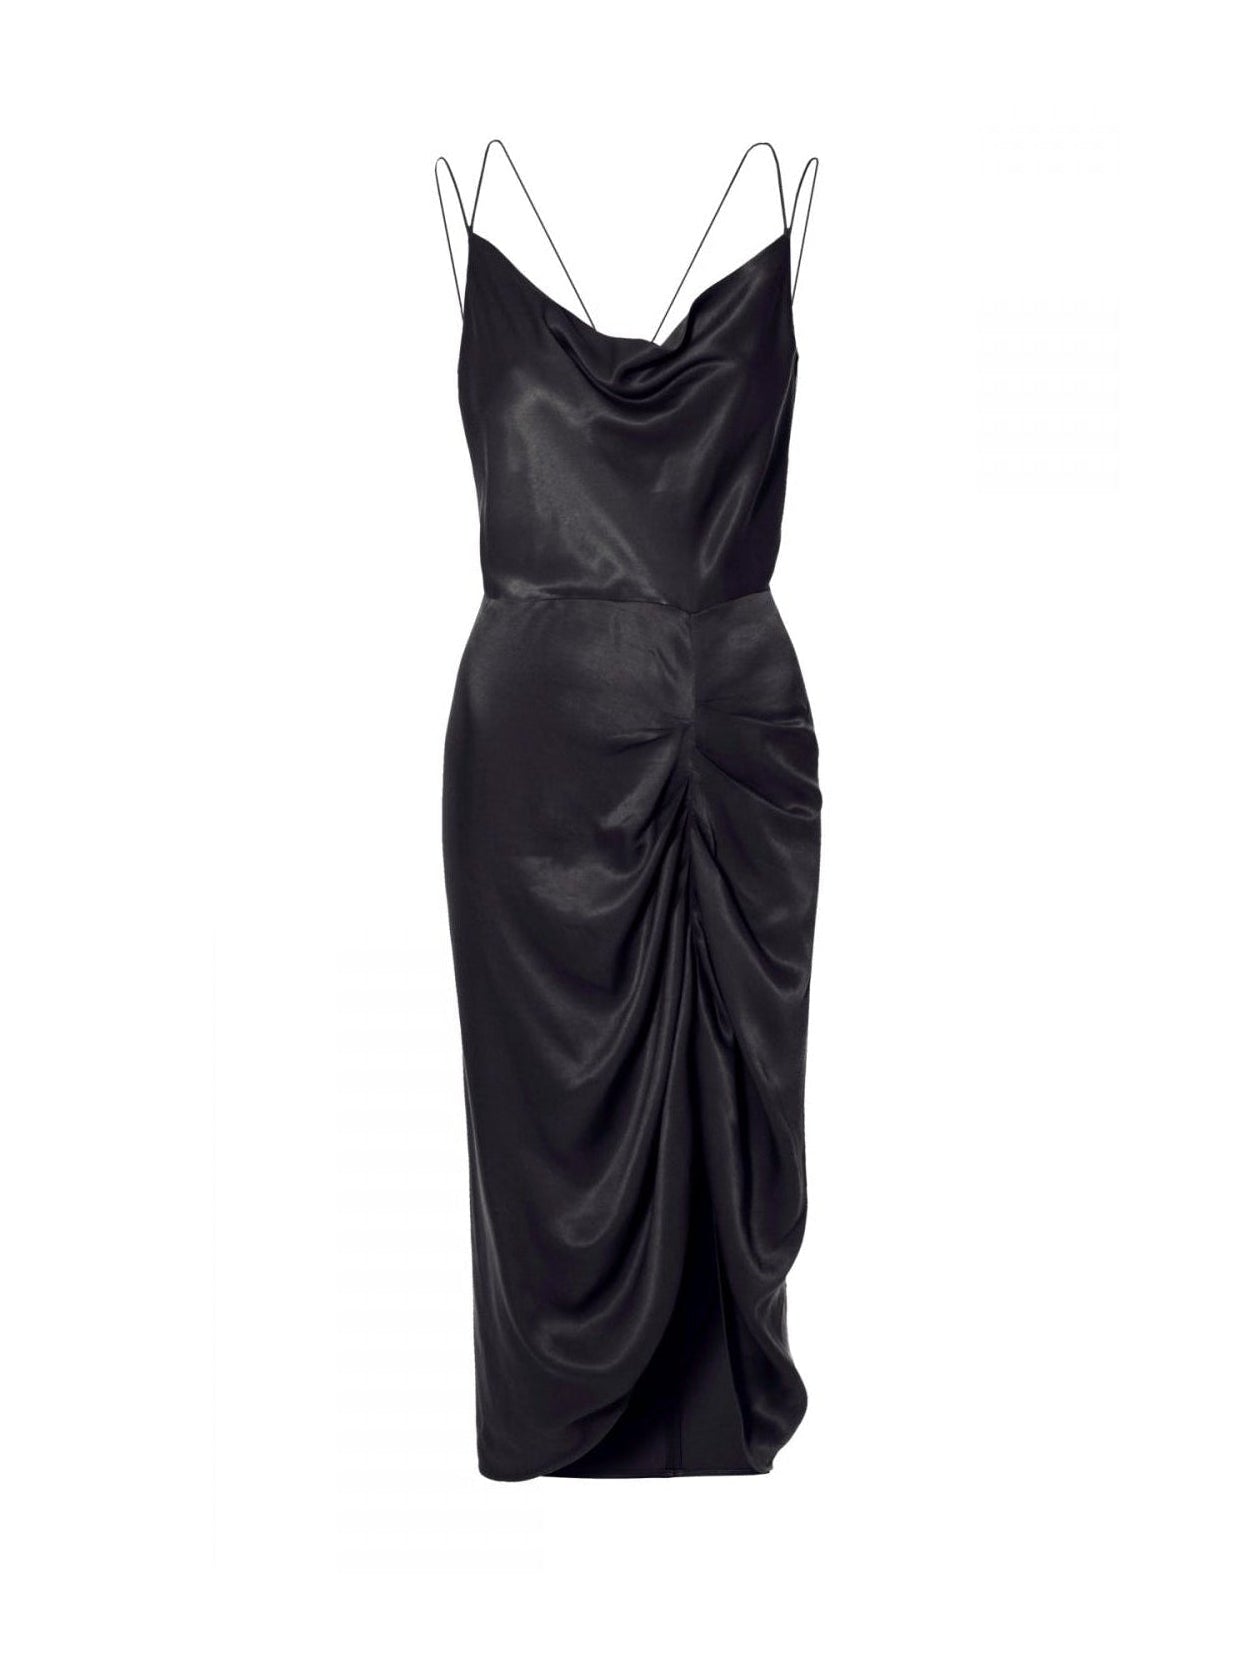 Ava Glossy Black Dress